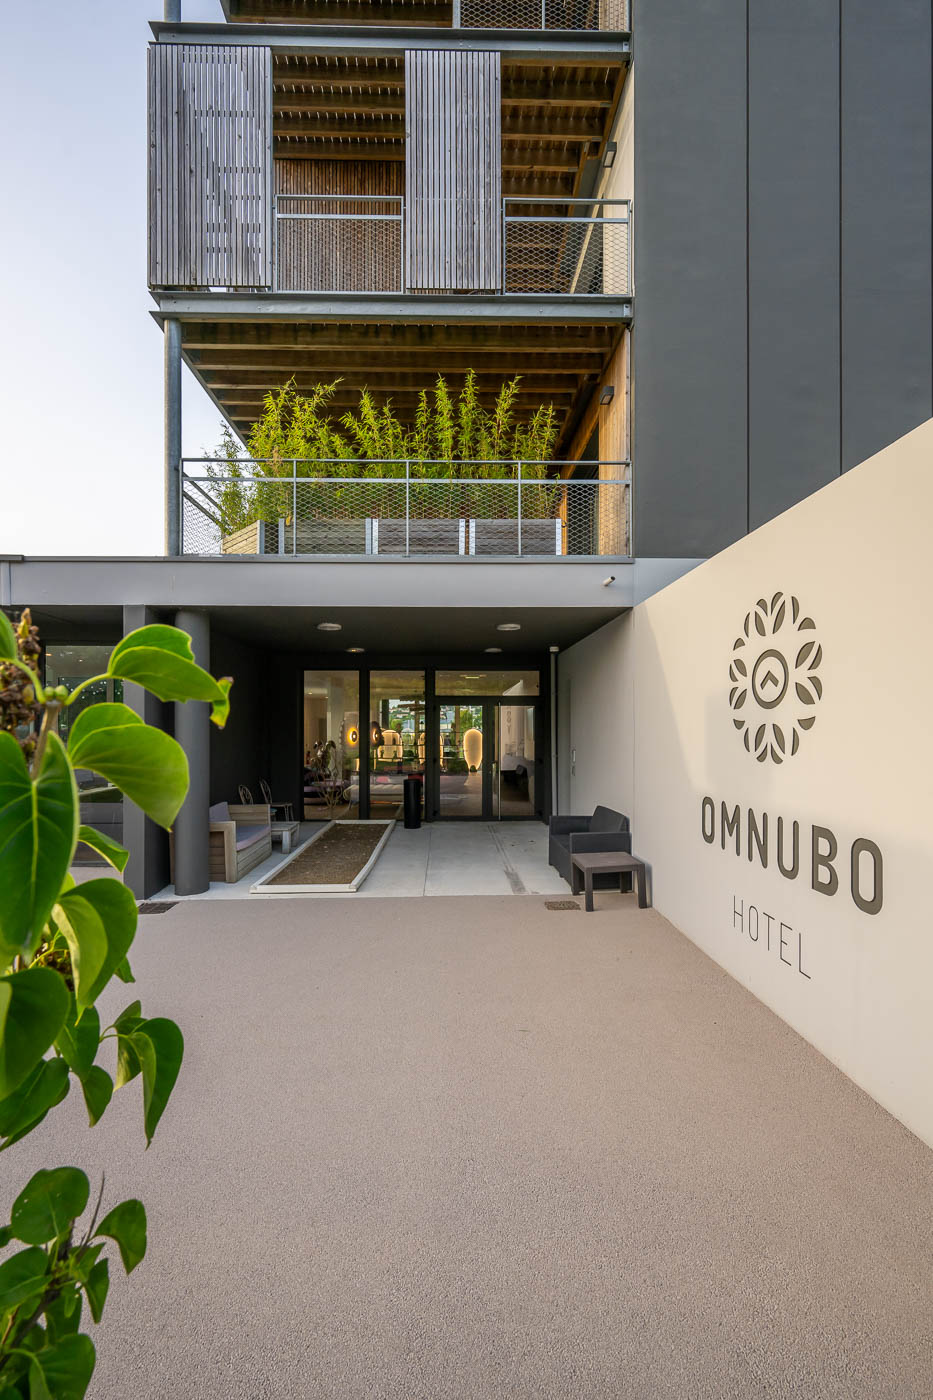 Hotel Omnubo